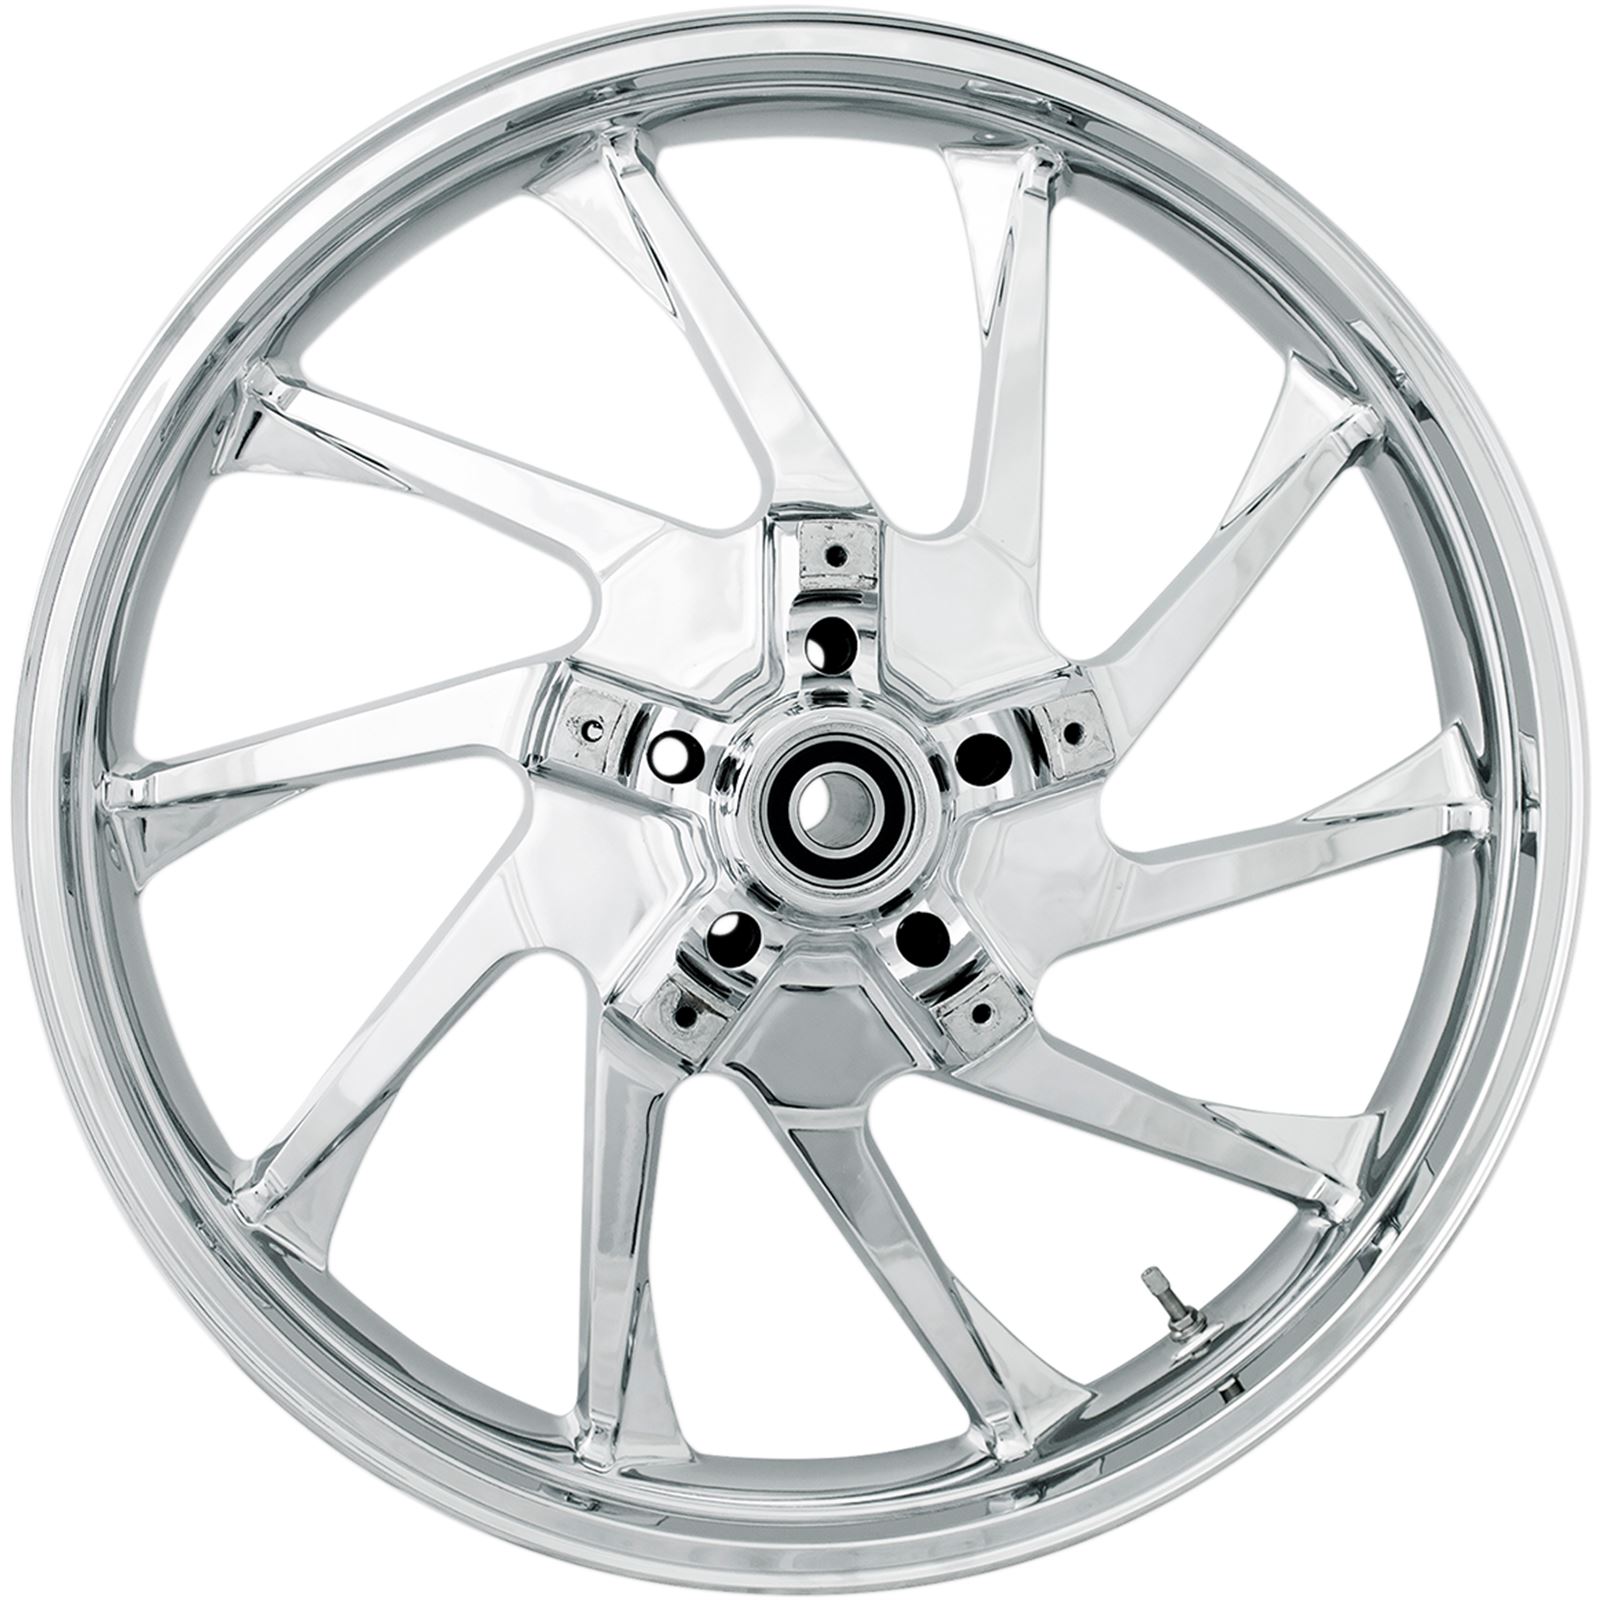 Coastal Moto Front Wheel - Hurricane 3D - Dual Disc/ABS - Chrome - 21"x3.50"